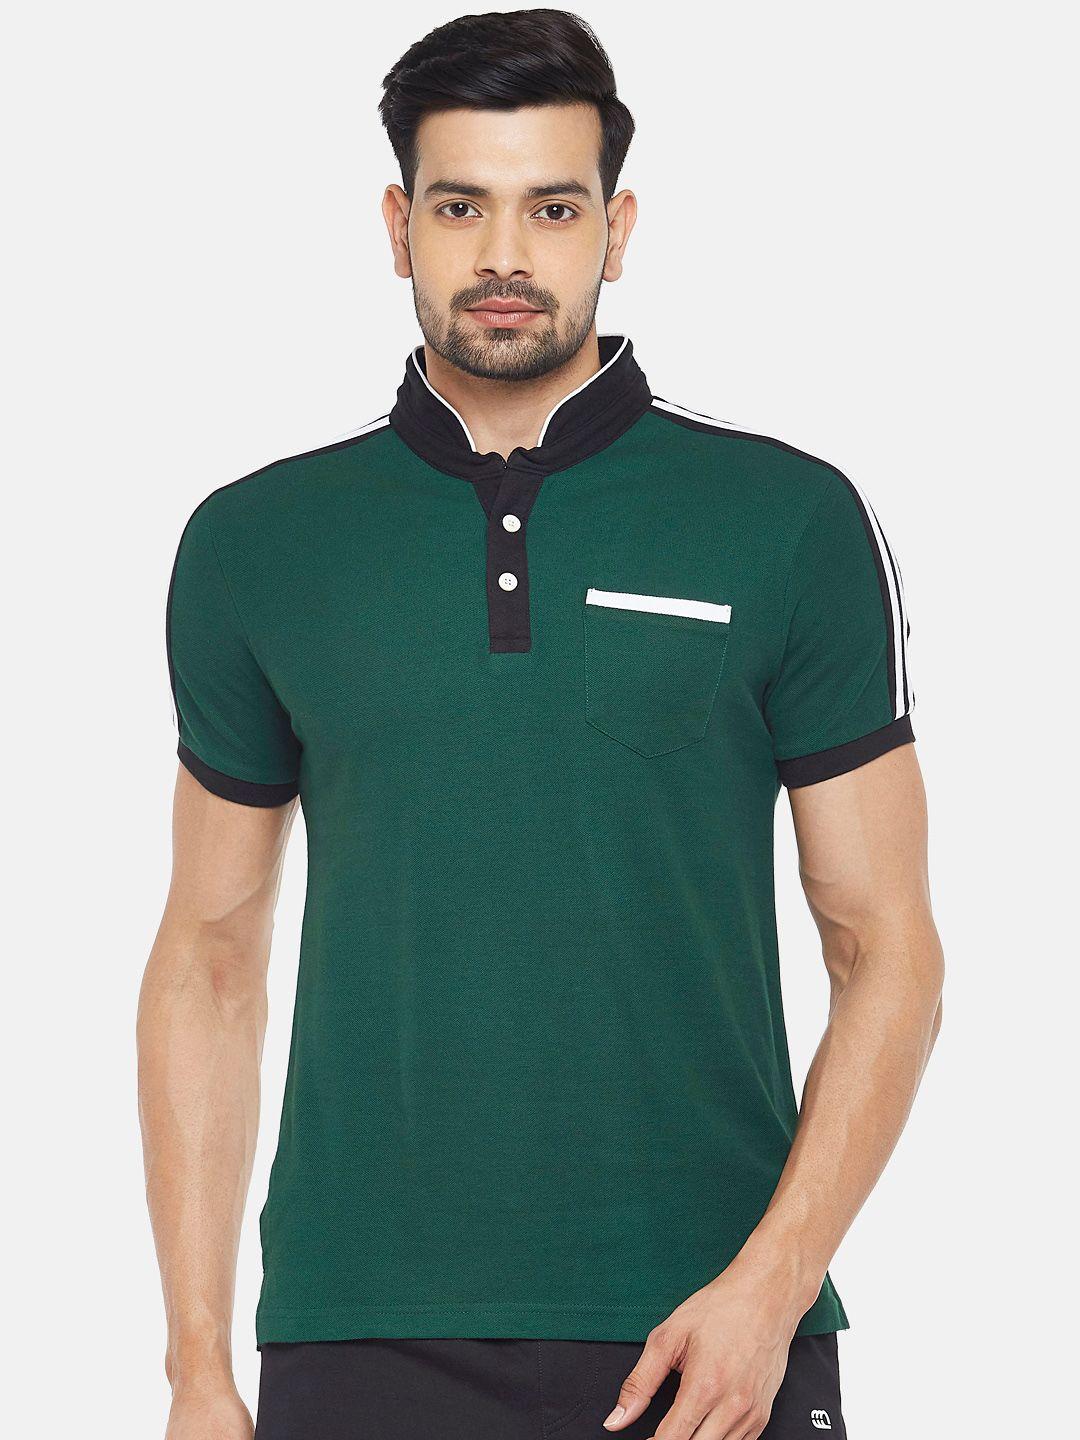 ajile-by-pantaloons-men-green-solid-high-neck-t-shirt